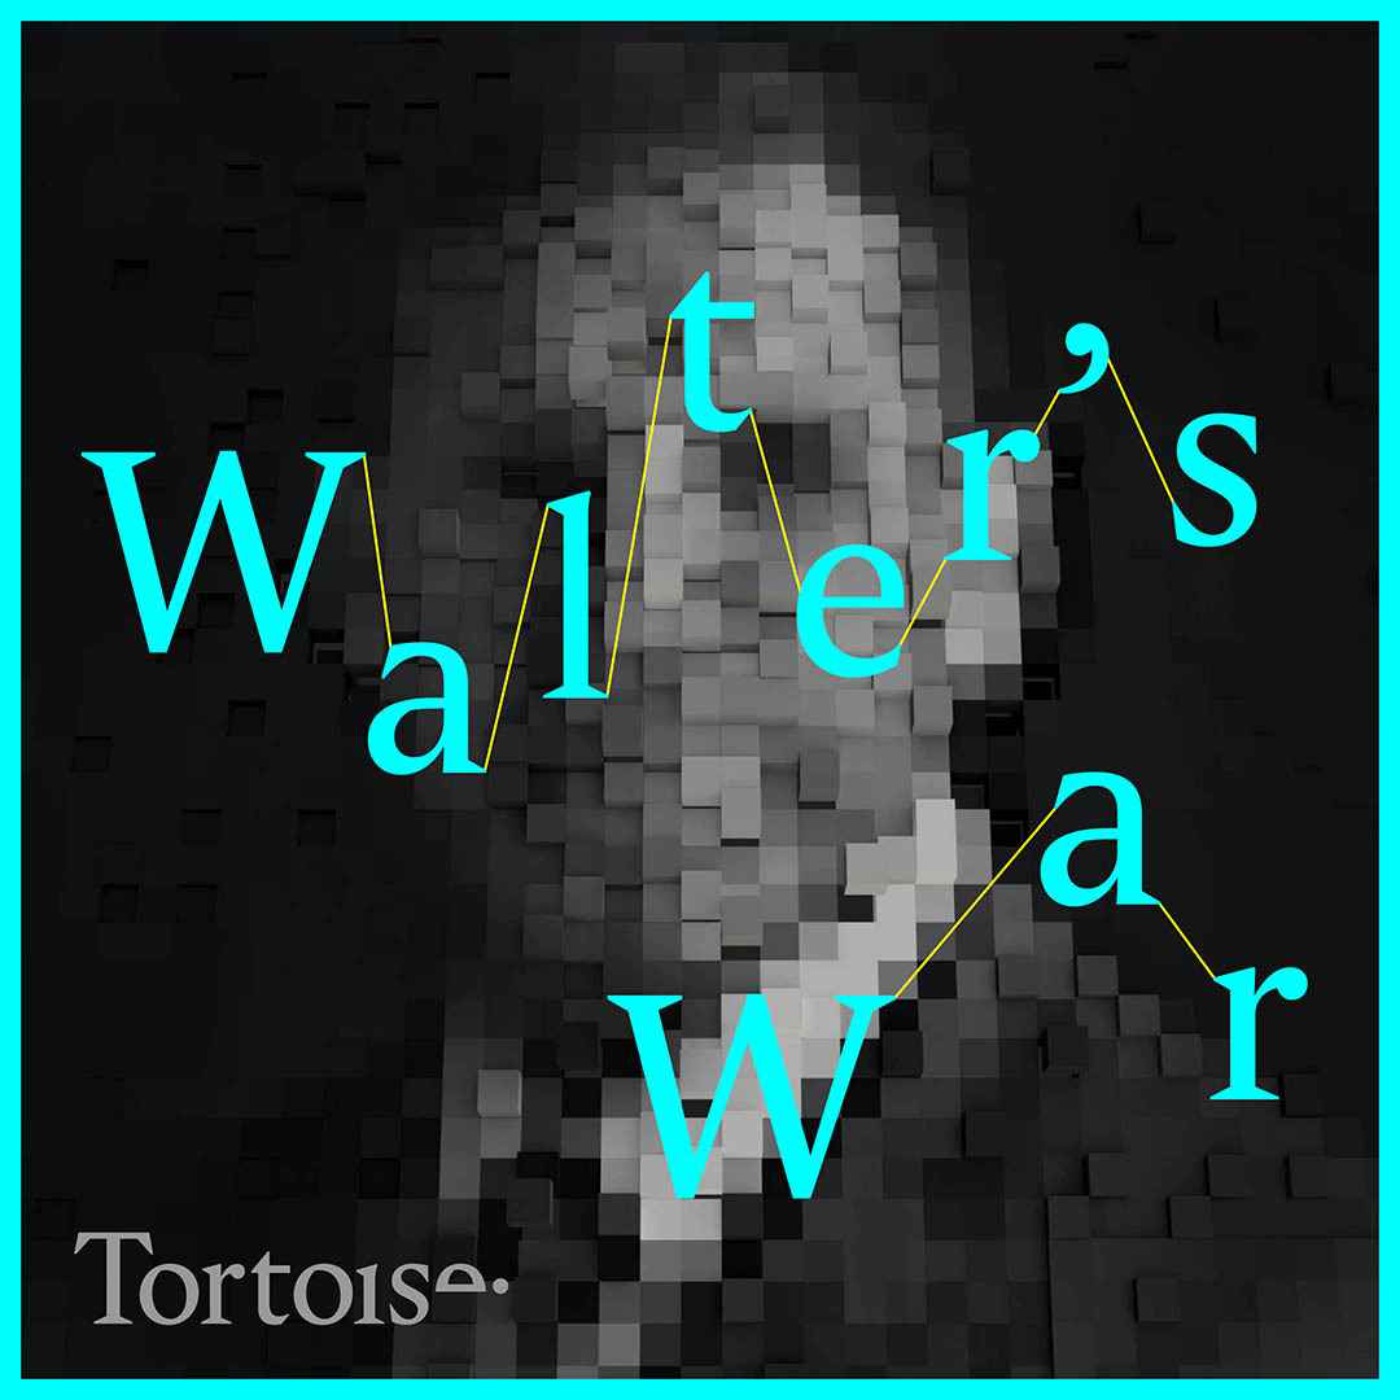 Introducing: Walter’s War